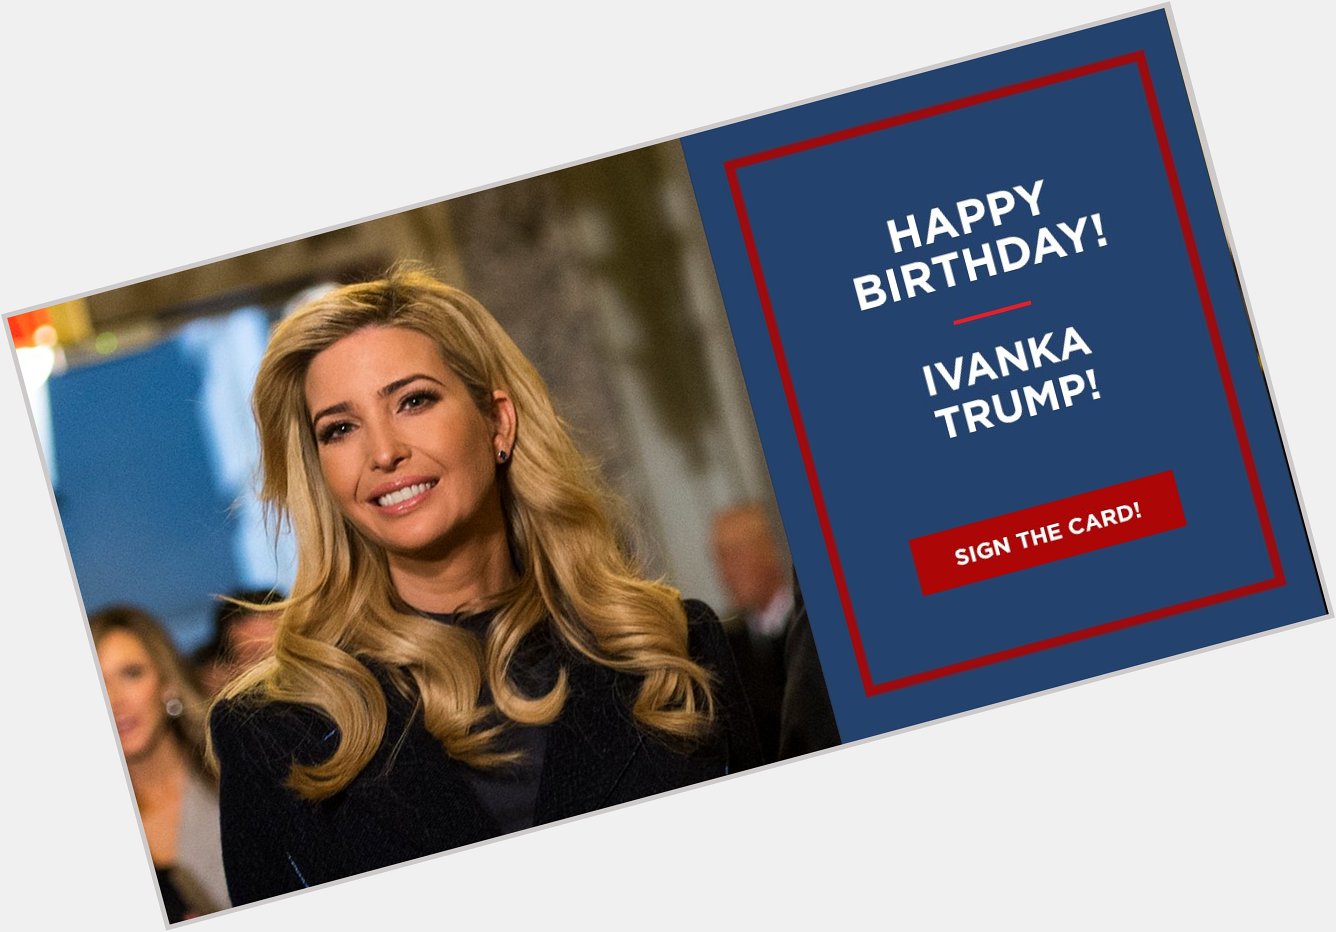 Sign my card to wish Ivanka Trump a happy birthday!  